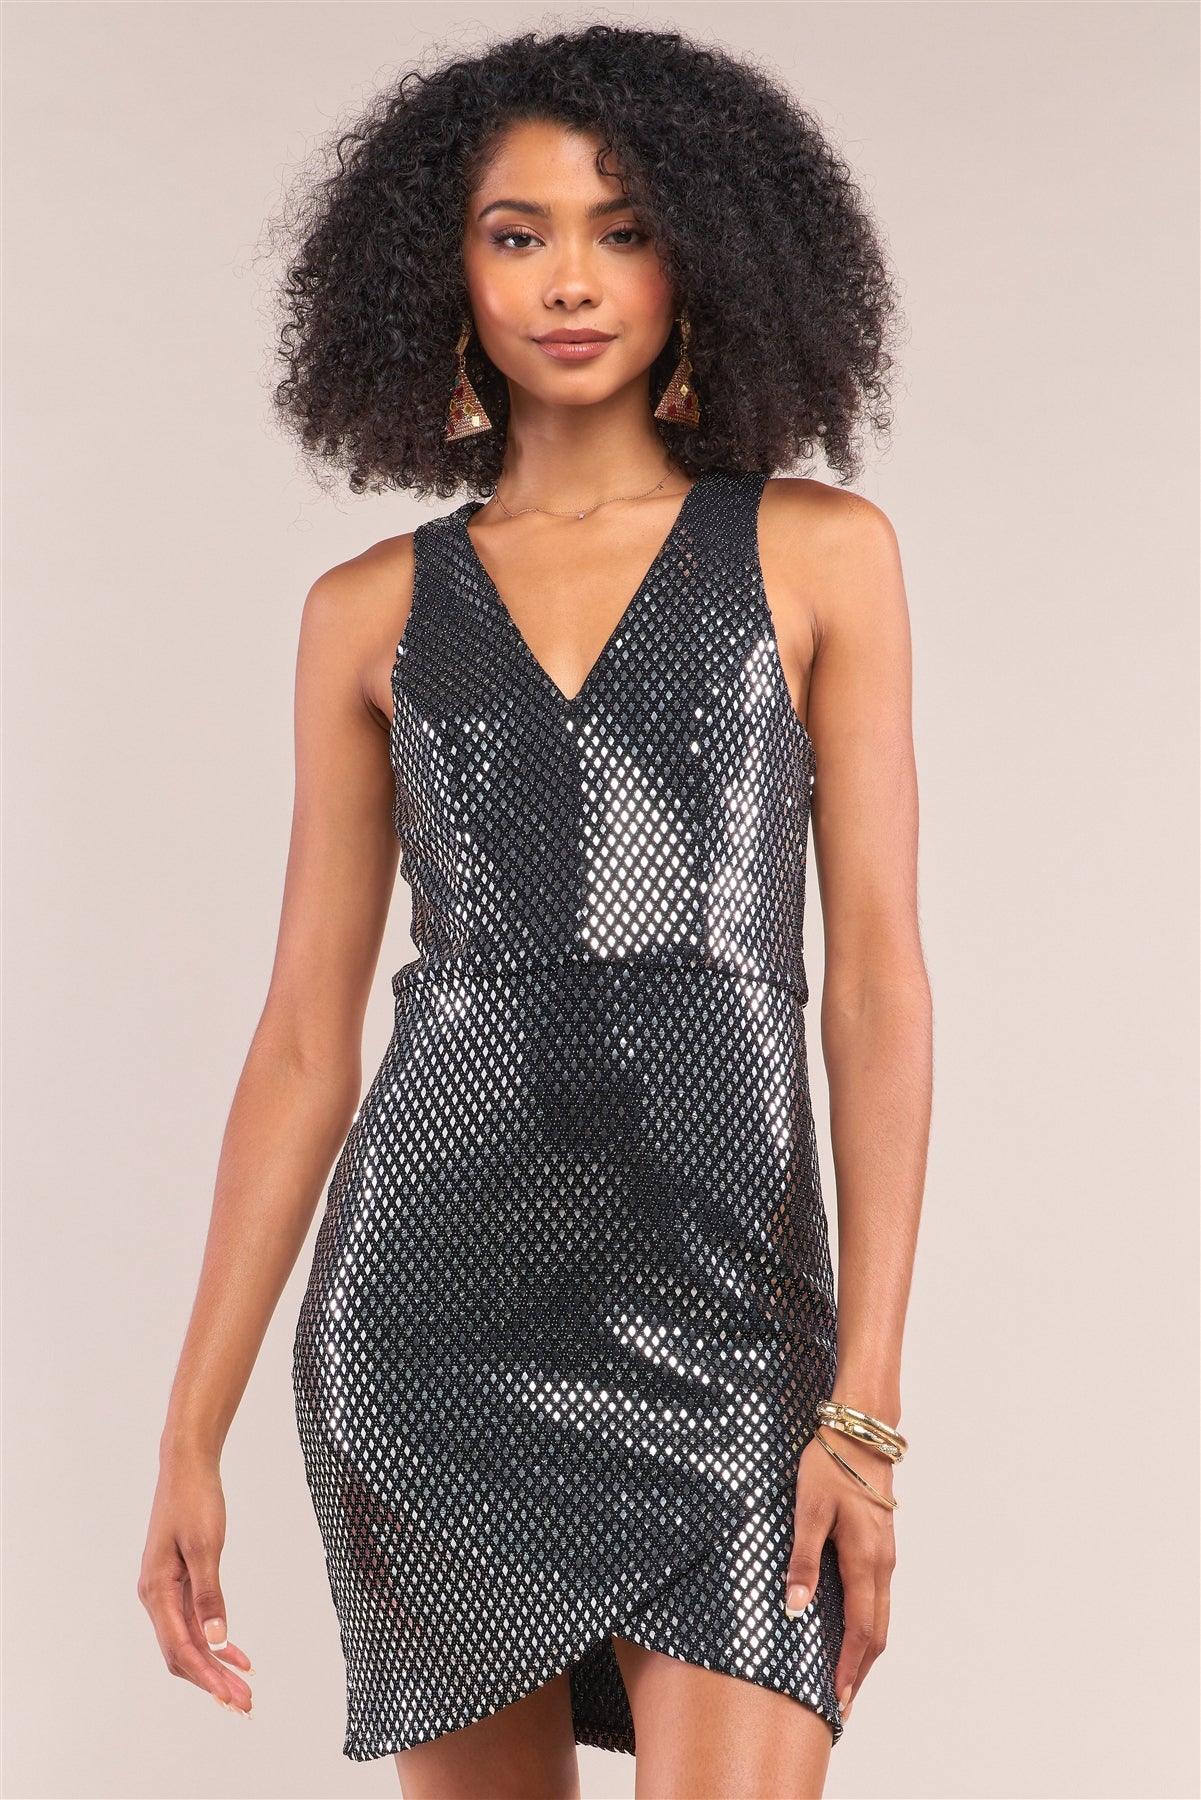 Shattered Glass Black&Silver Retro Sleeveless Metallic Sequin Embroidered Mesh V-Neck Fitted Mini Dress /1-2-2-1